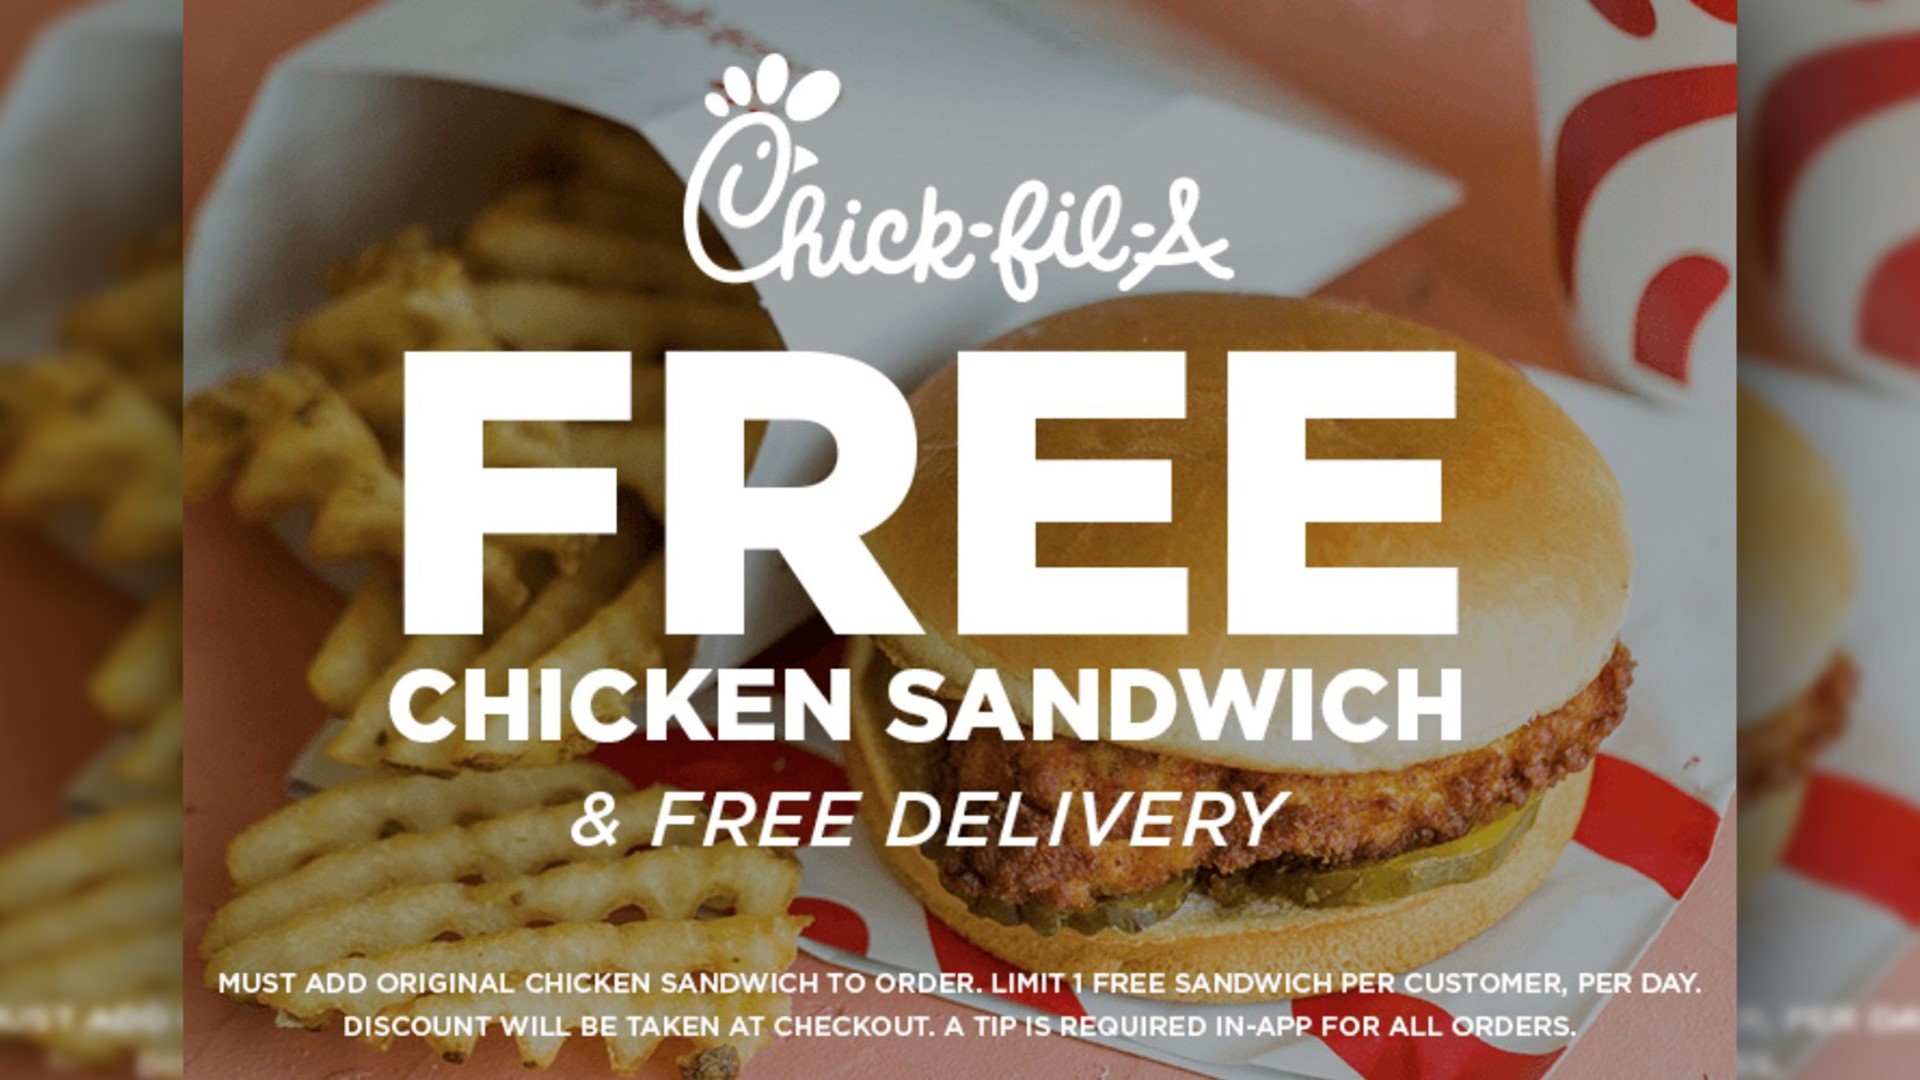 Get a free ChickfilA sandwich delivered using Favor app